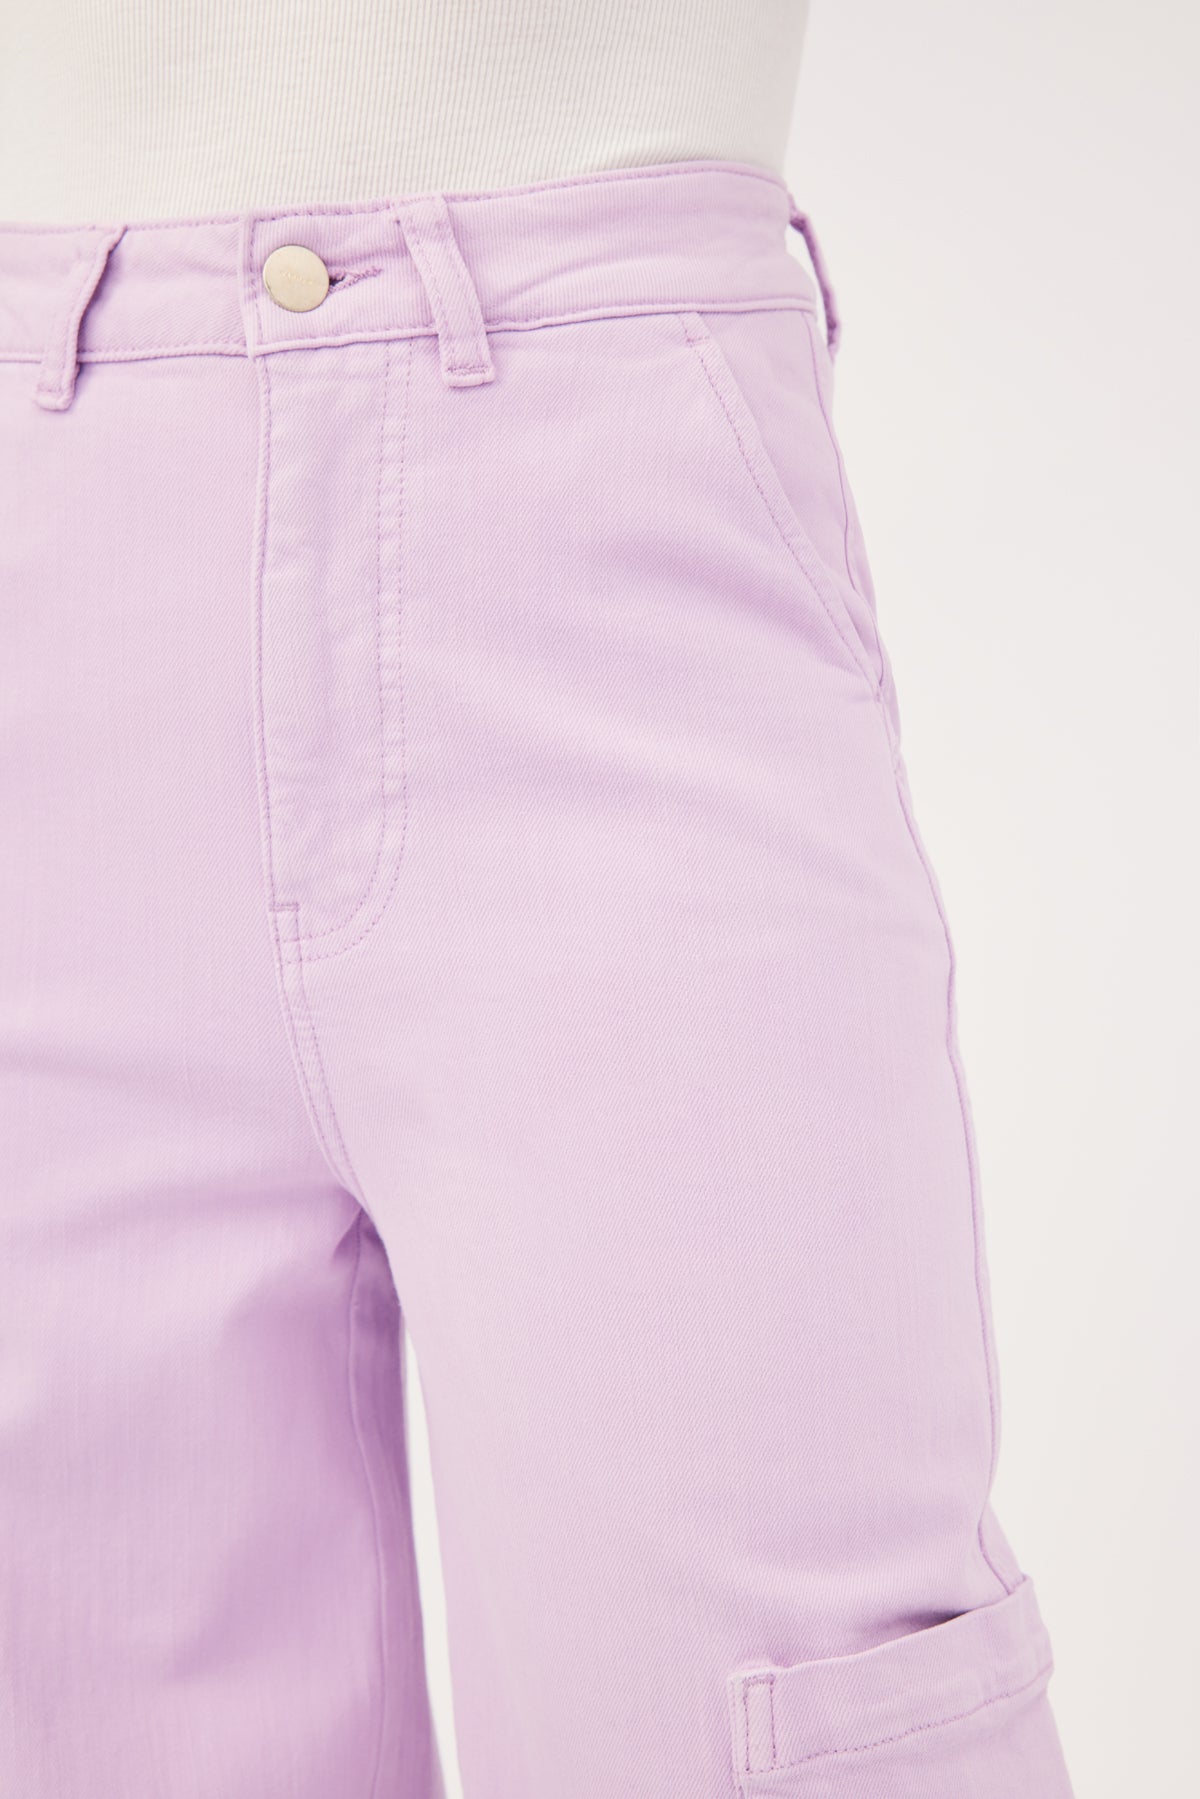 Blush Pink cotton straight pant for women - Kiran's Boutique